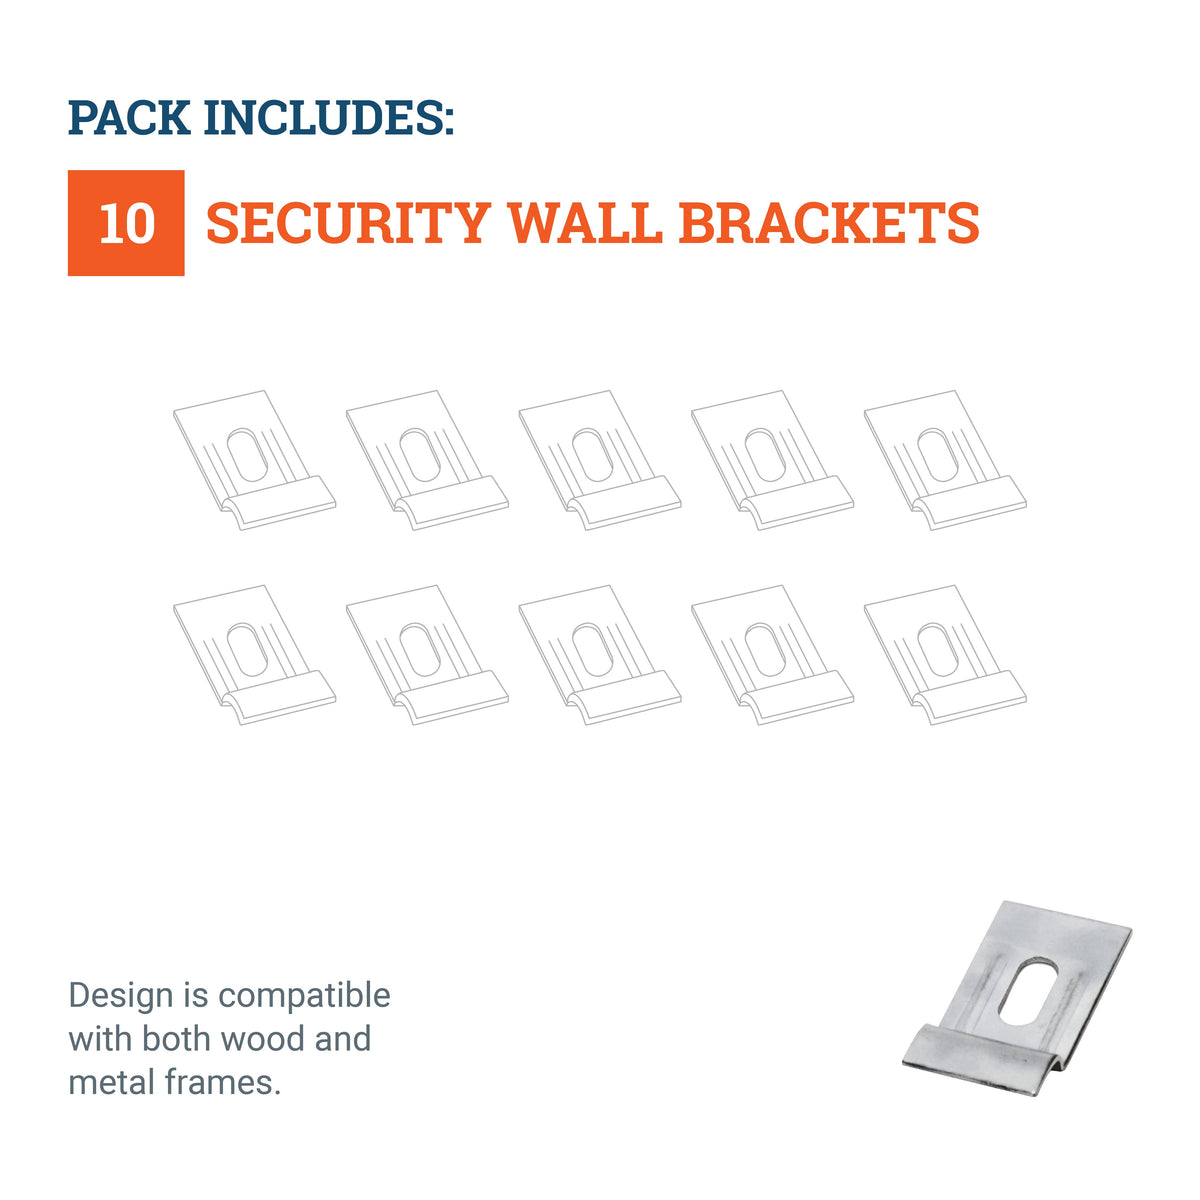 Security Wall Bracket - 10 Pack ($0.34 Each)